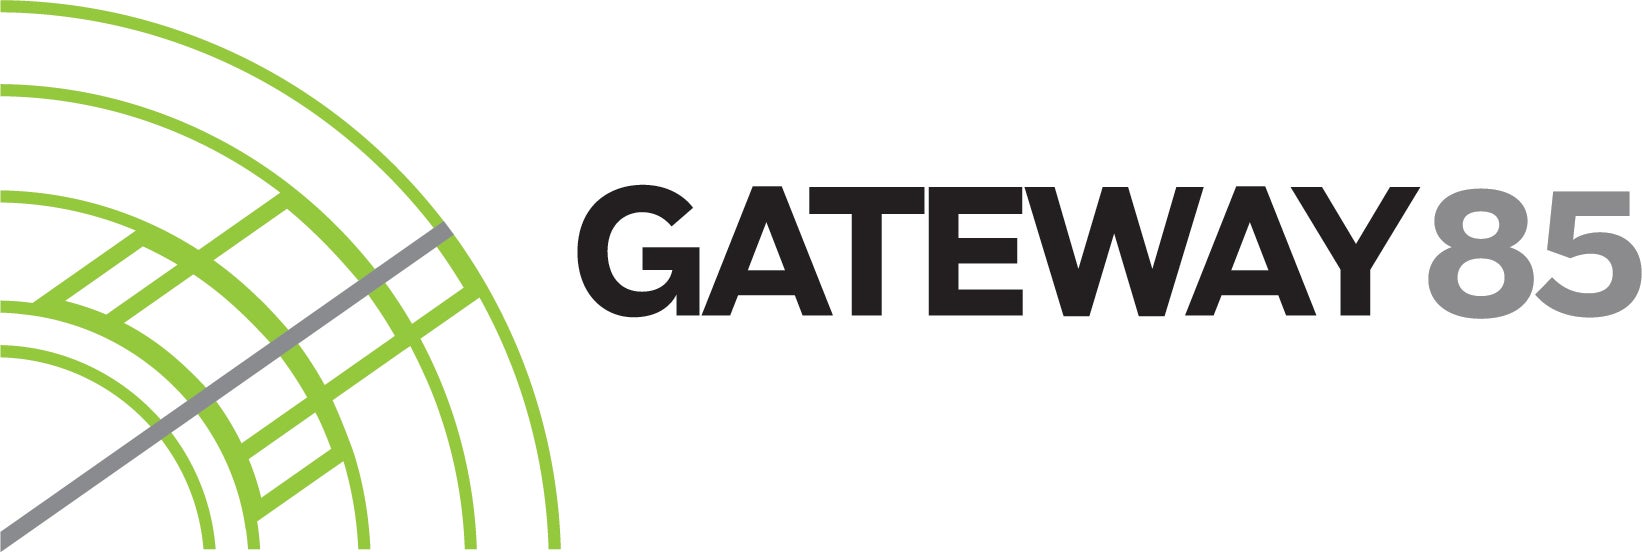 GATEWAY85_Logo_Horizontal_CMYK (003).jpg